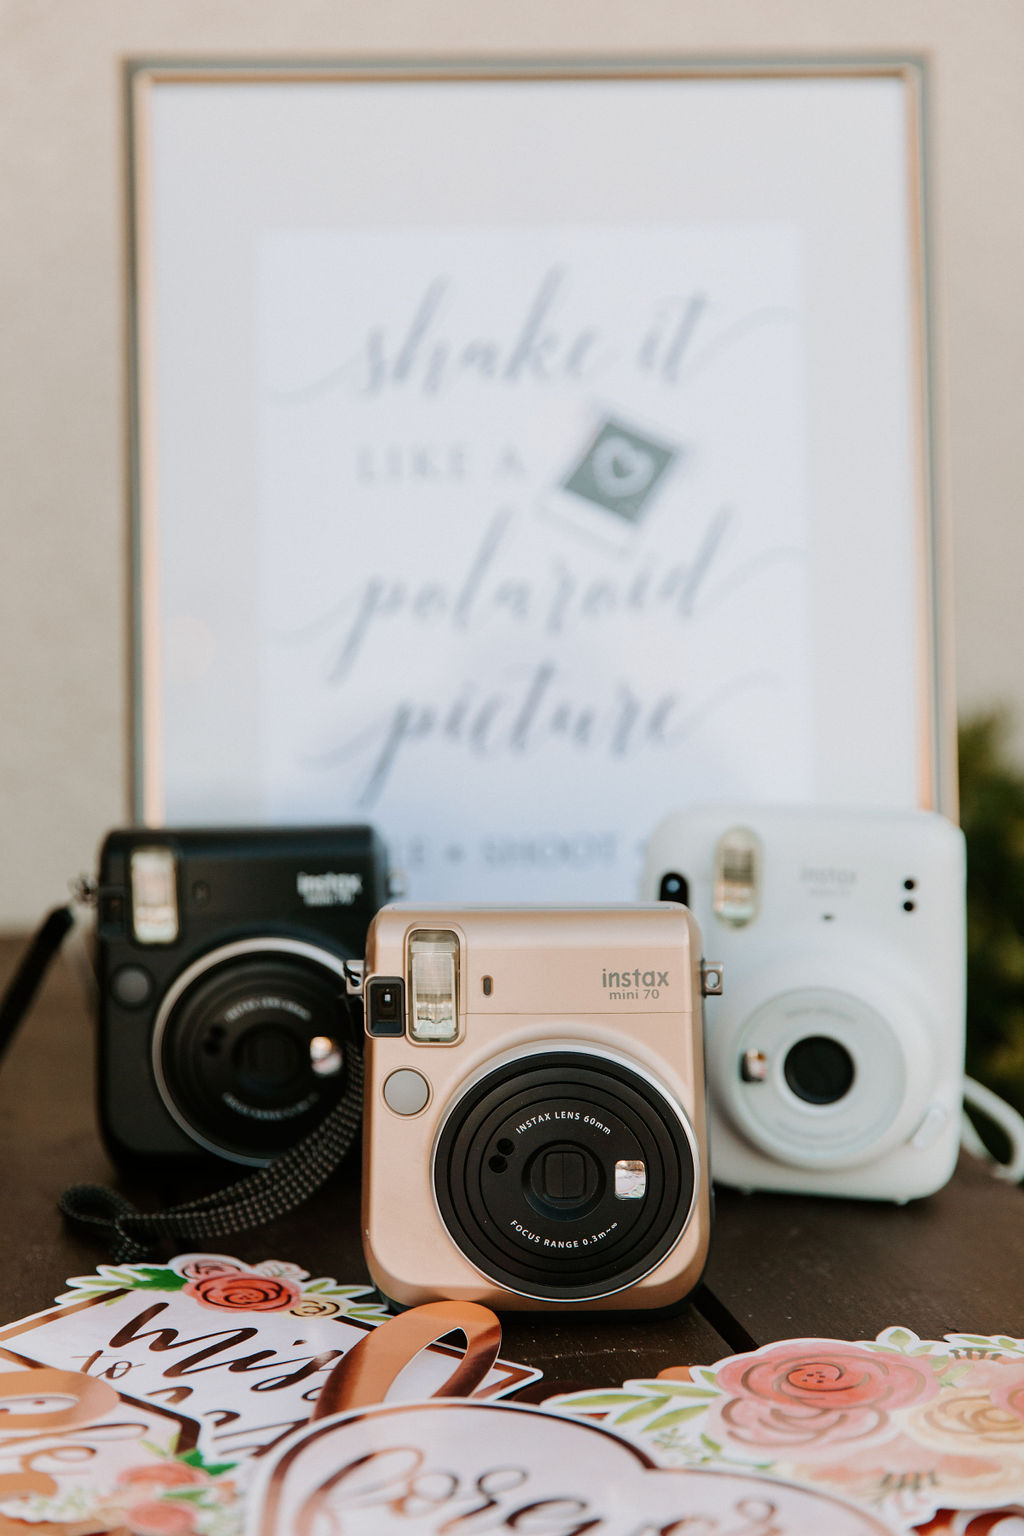 Polaroid guest book for Romantic Desert & Backyard Micro-Wedding